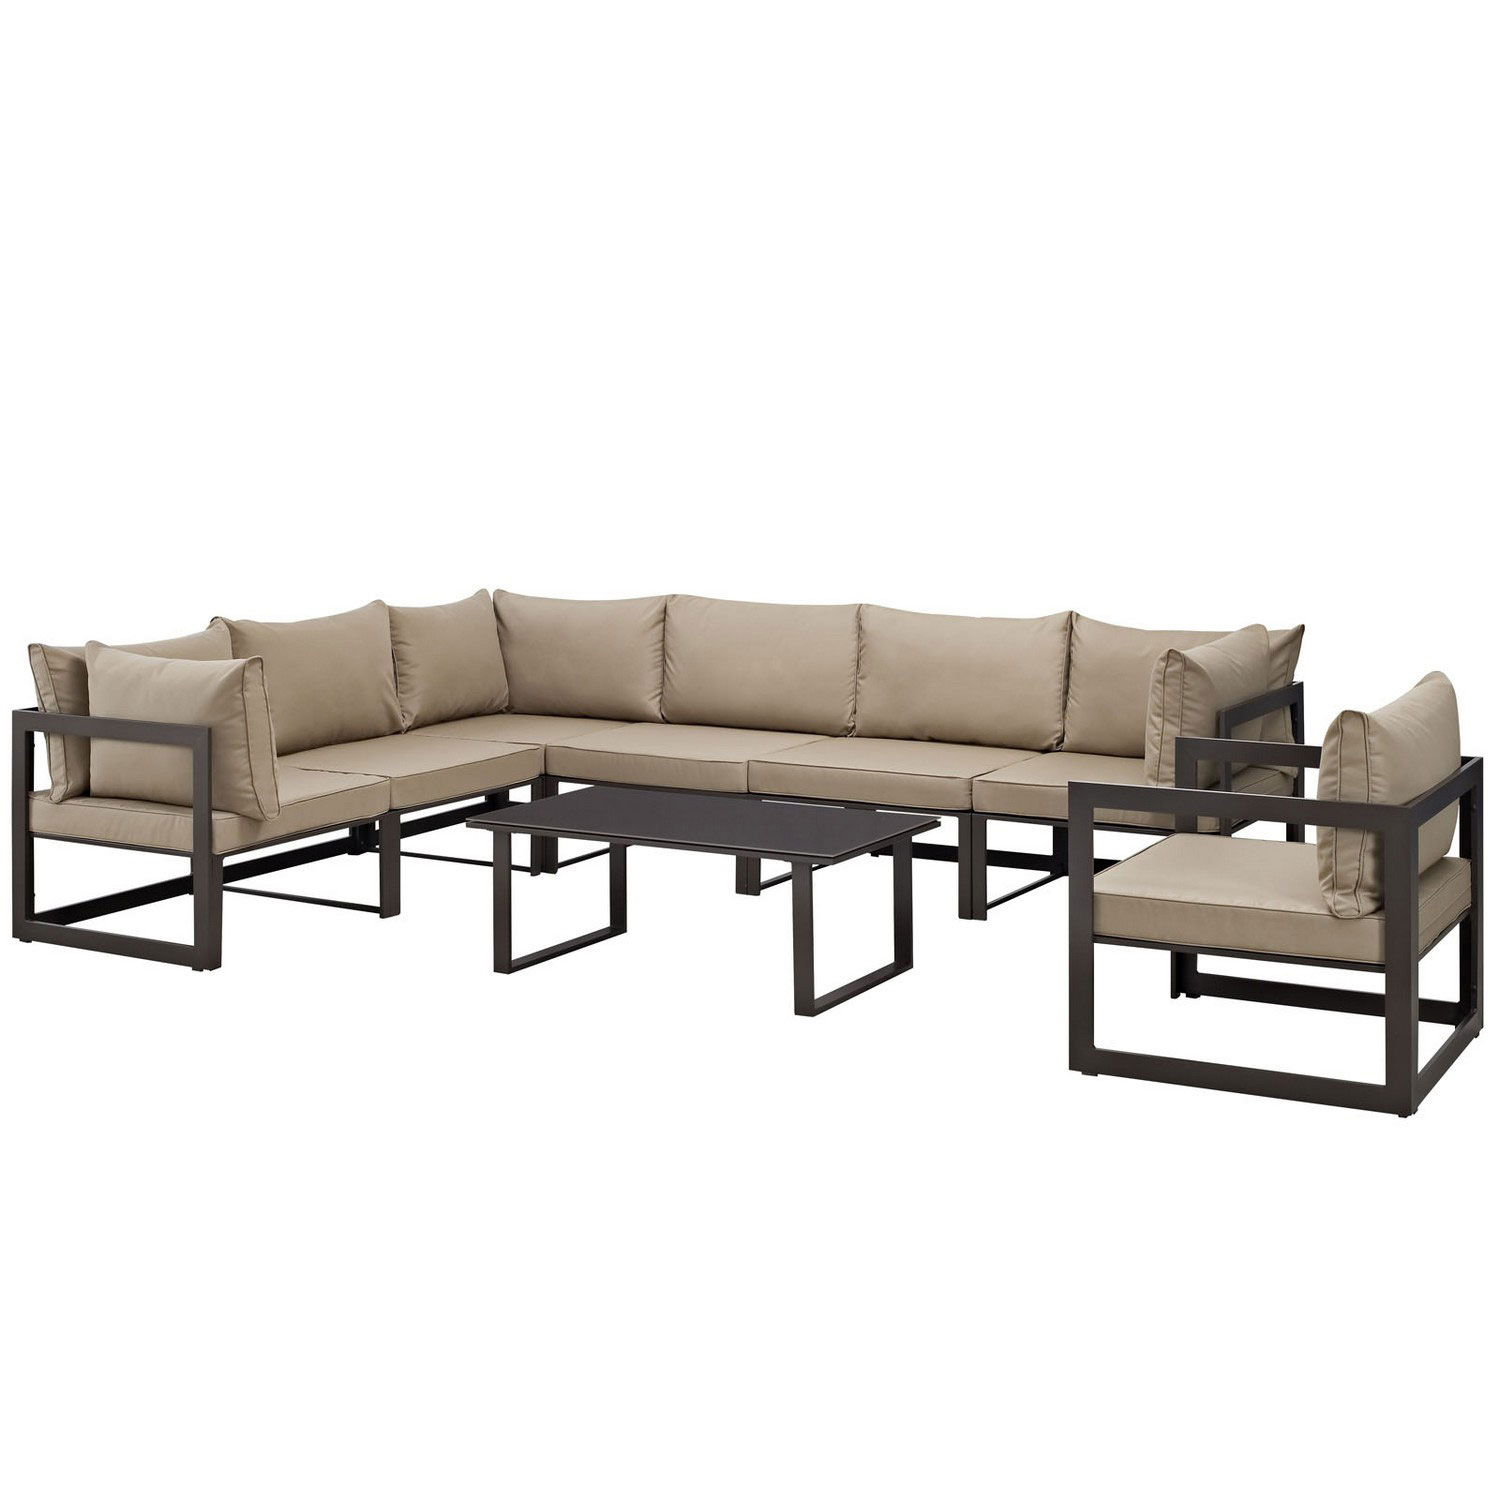 Modway Fortuna 8 Piece Outdoor Patio Sectional Sofa Set - Brown/Mocha